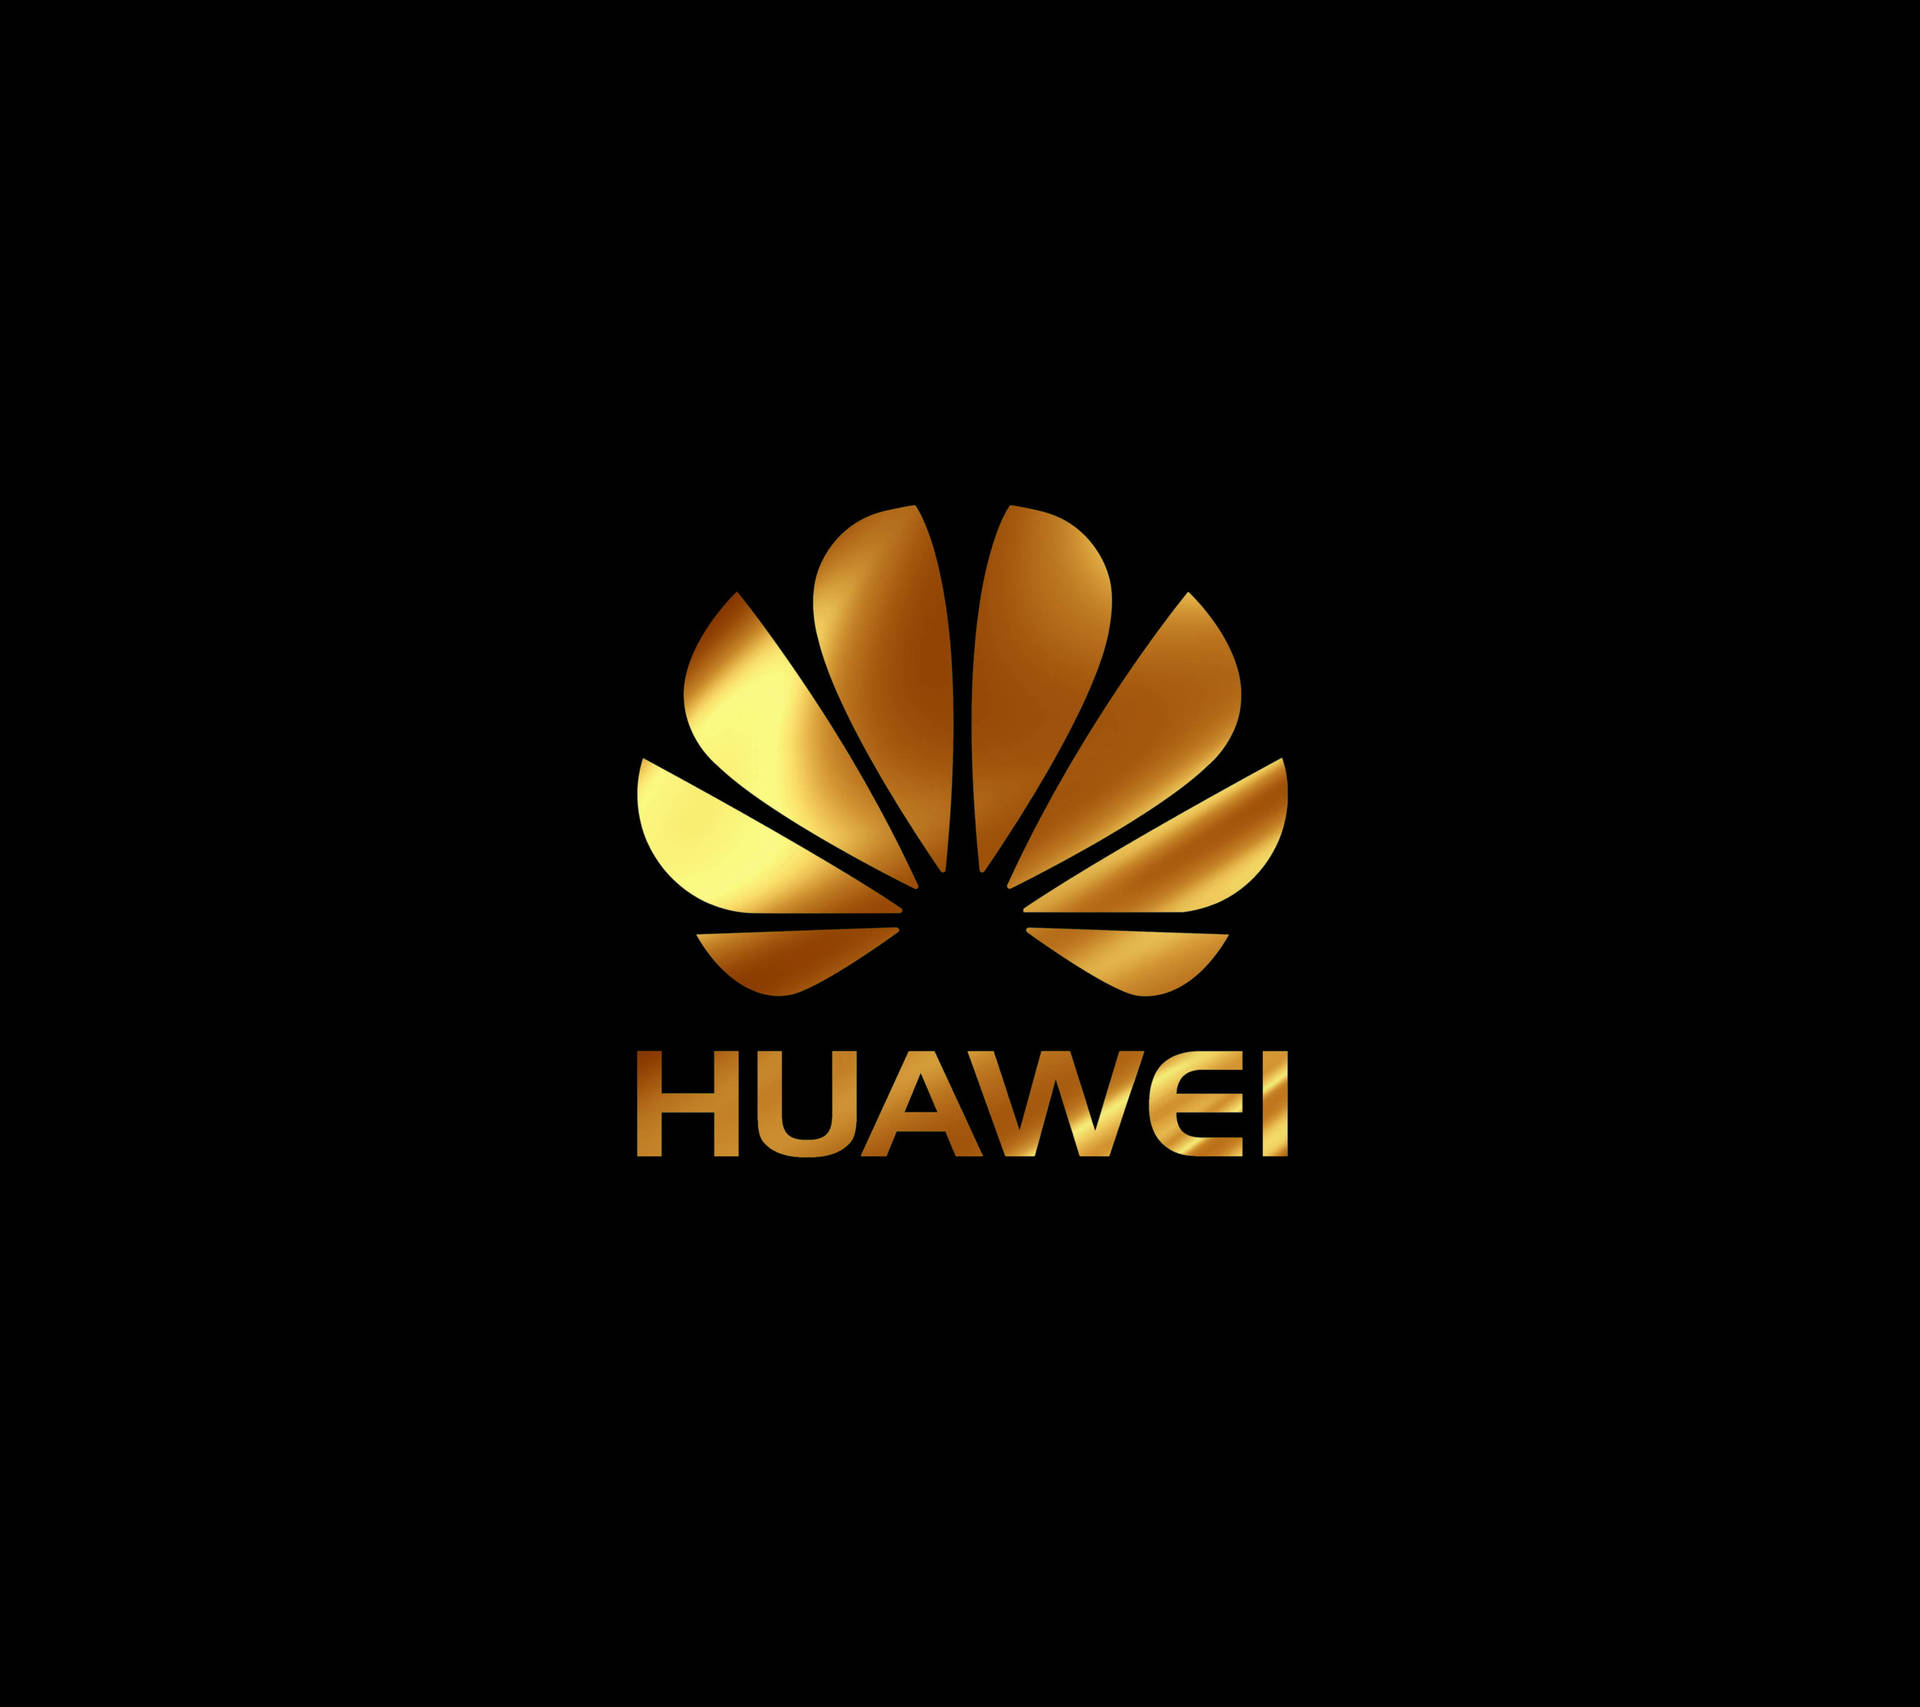 Huawei Gold Brand Logo Wallpaper